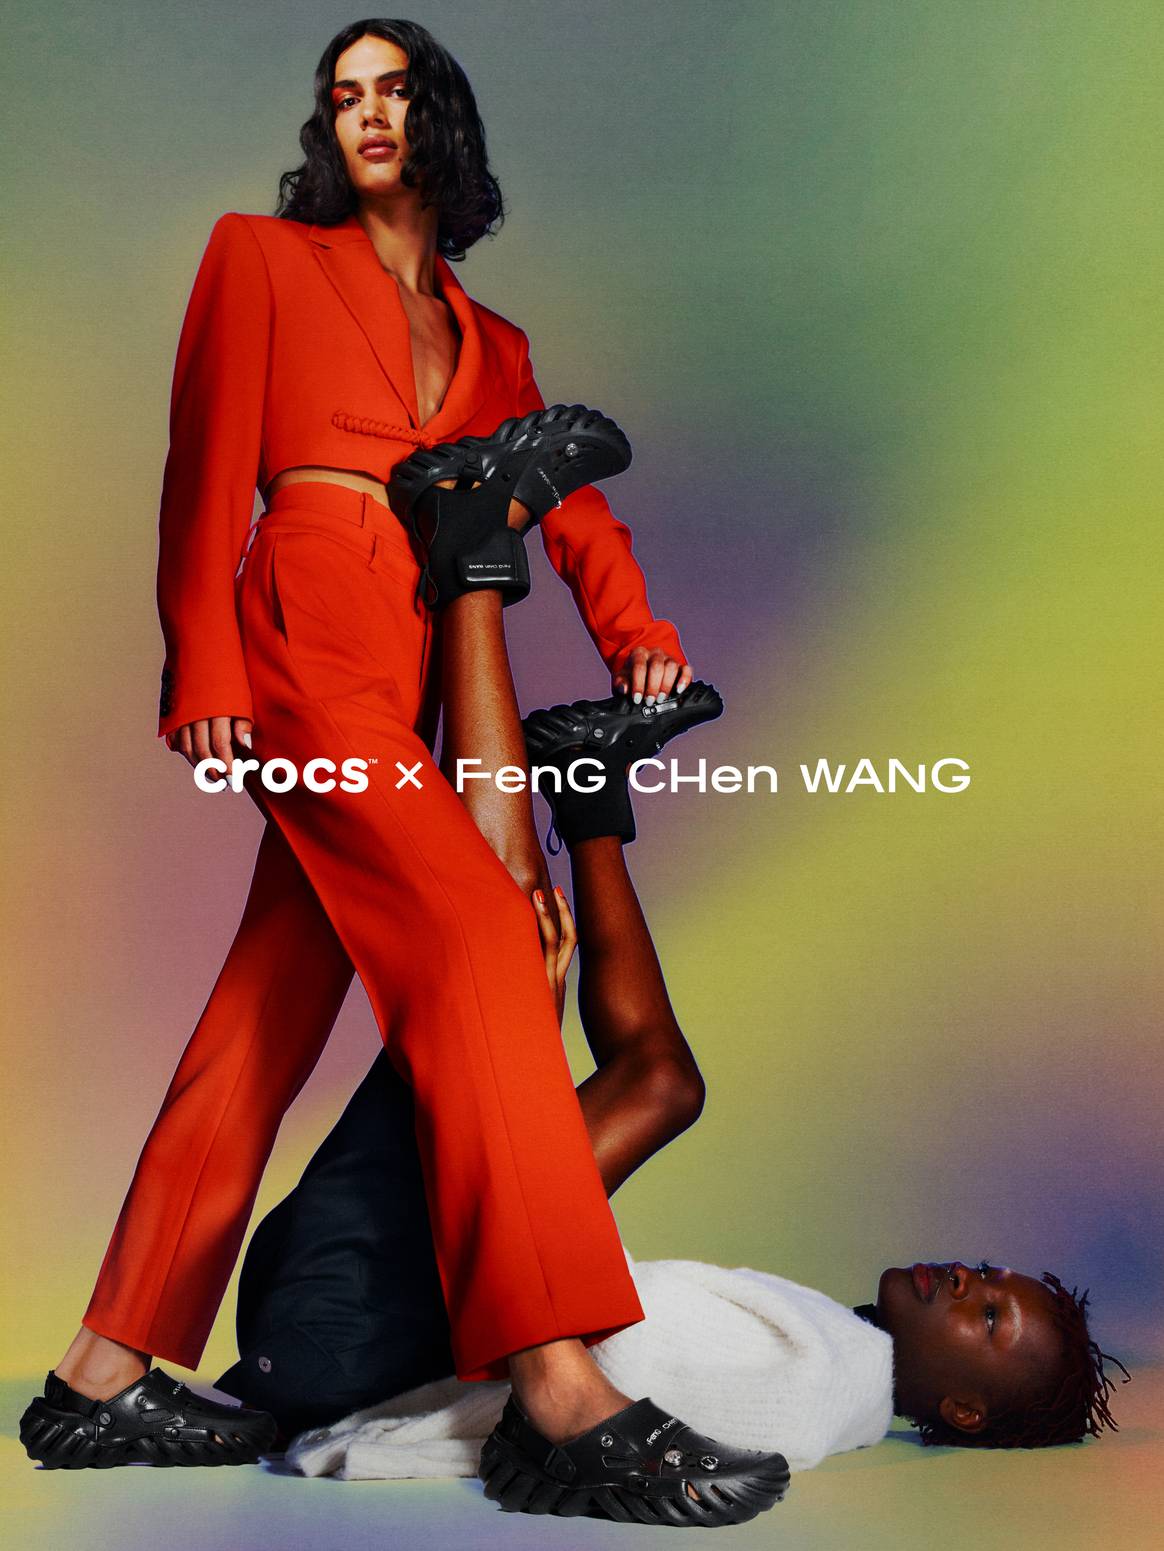 Crocs x Feng Chen Wang collection